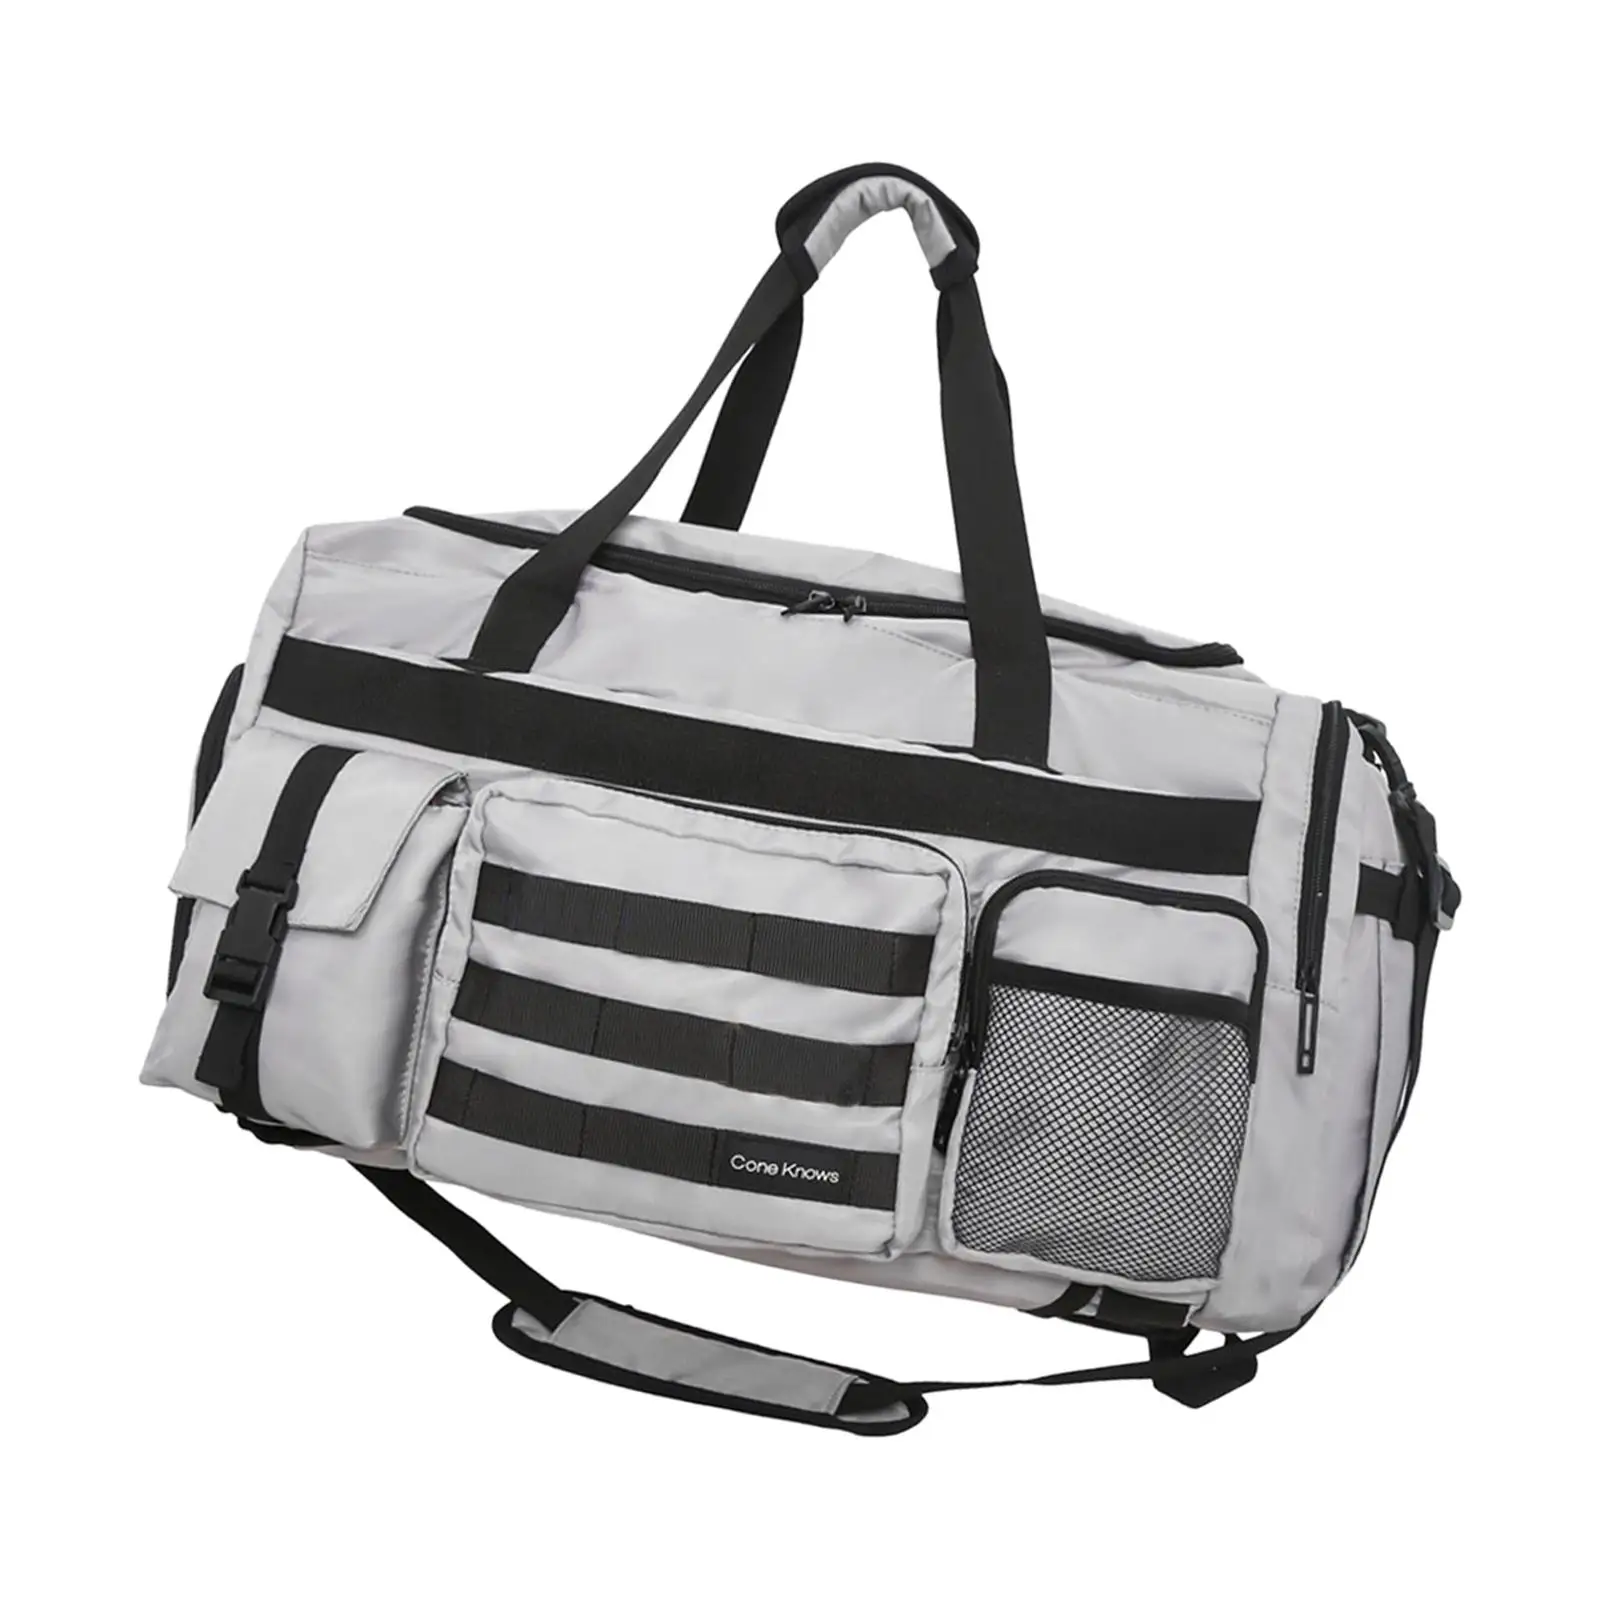 Duffle Backpack Sports Gym Bag Luggage Bag Toiletry Men Women Duffle Bag Storage Bag Shoulder Bag for Outddor Exercise Workout